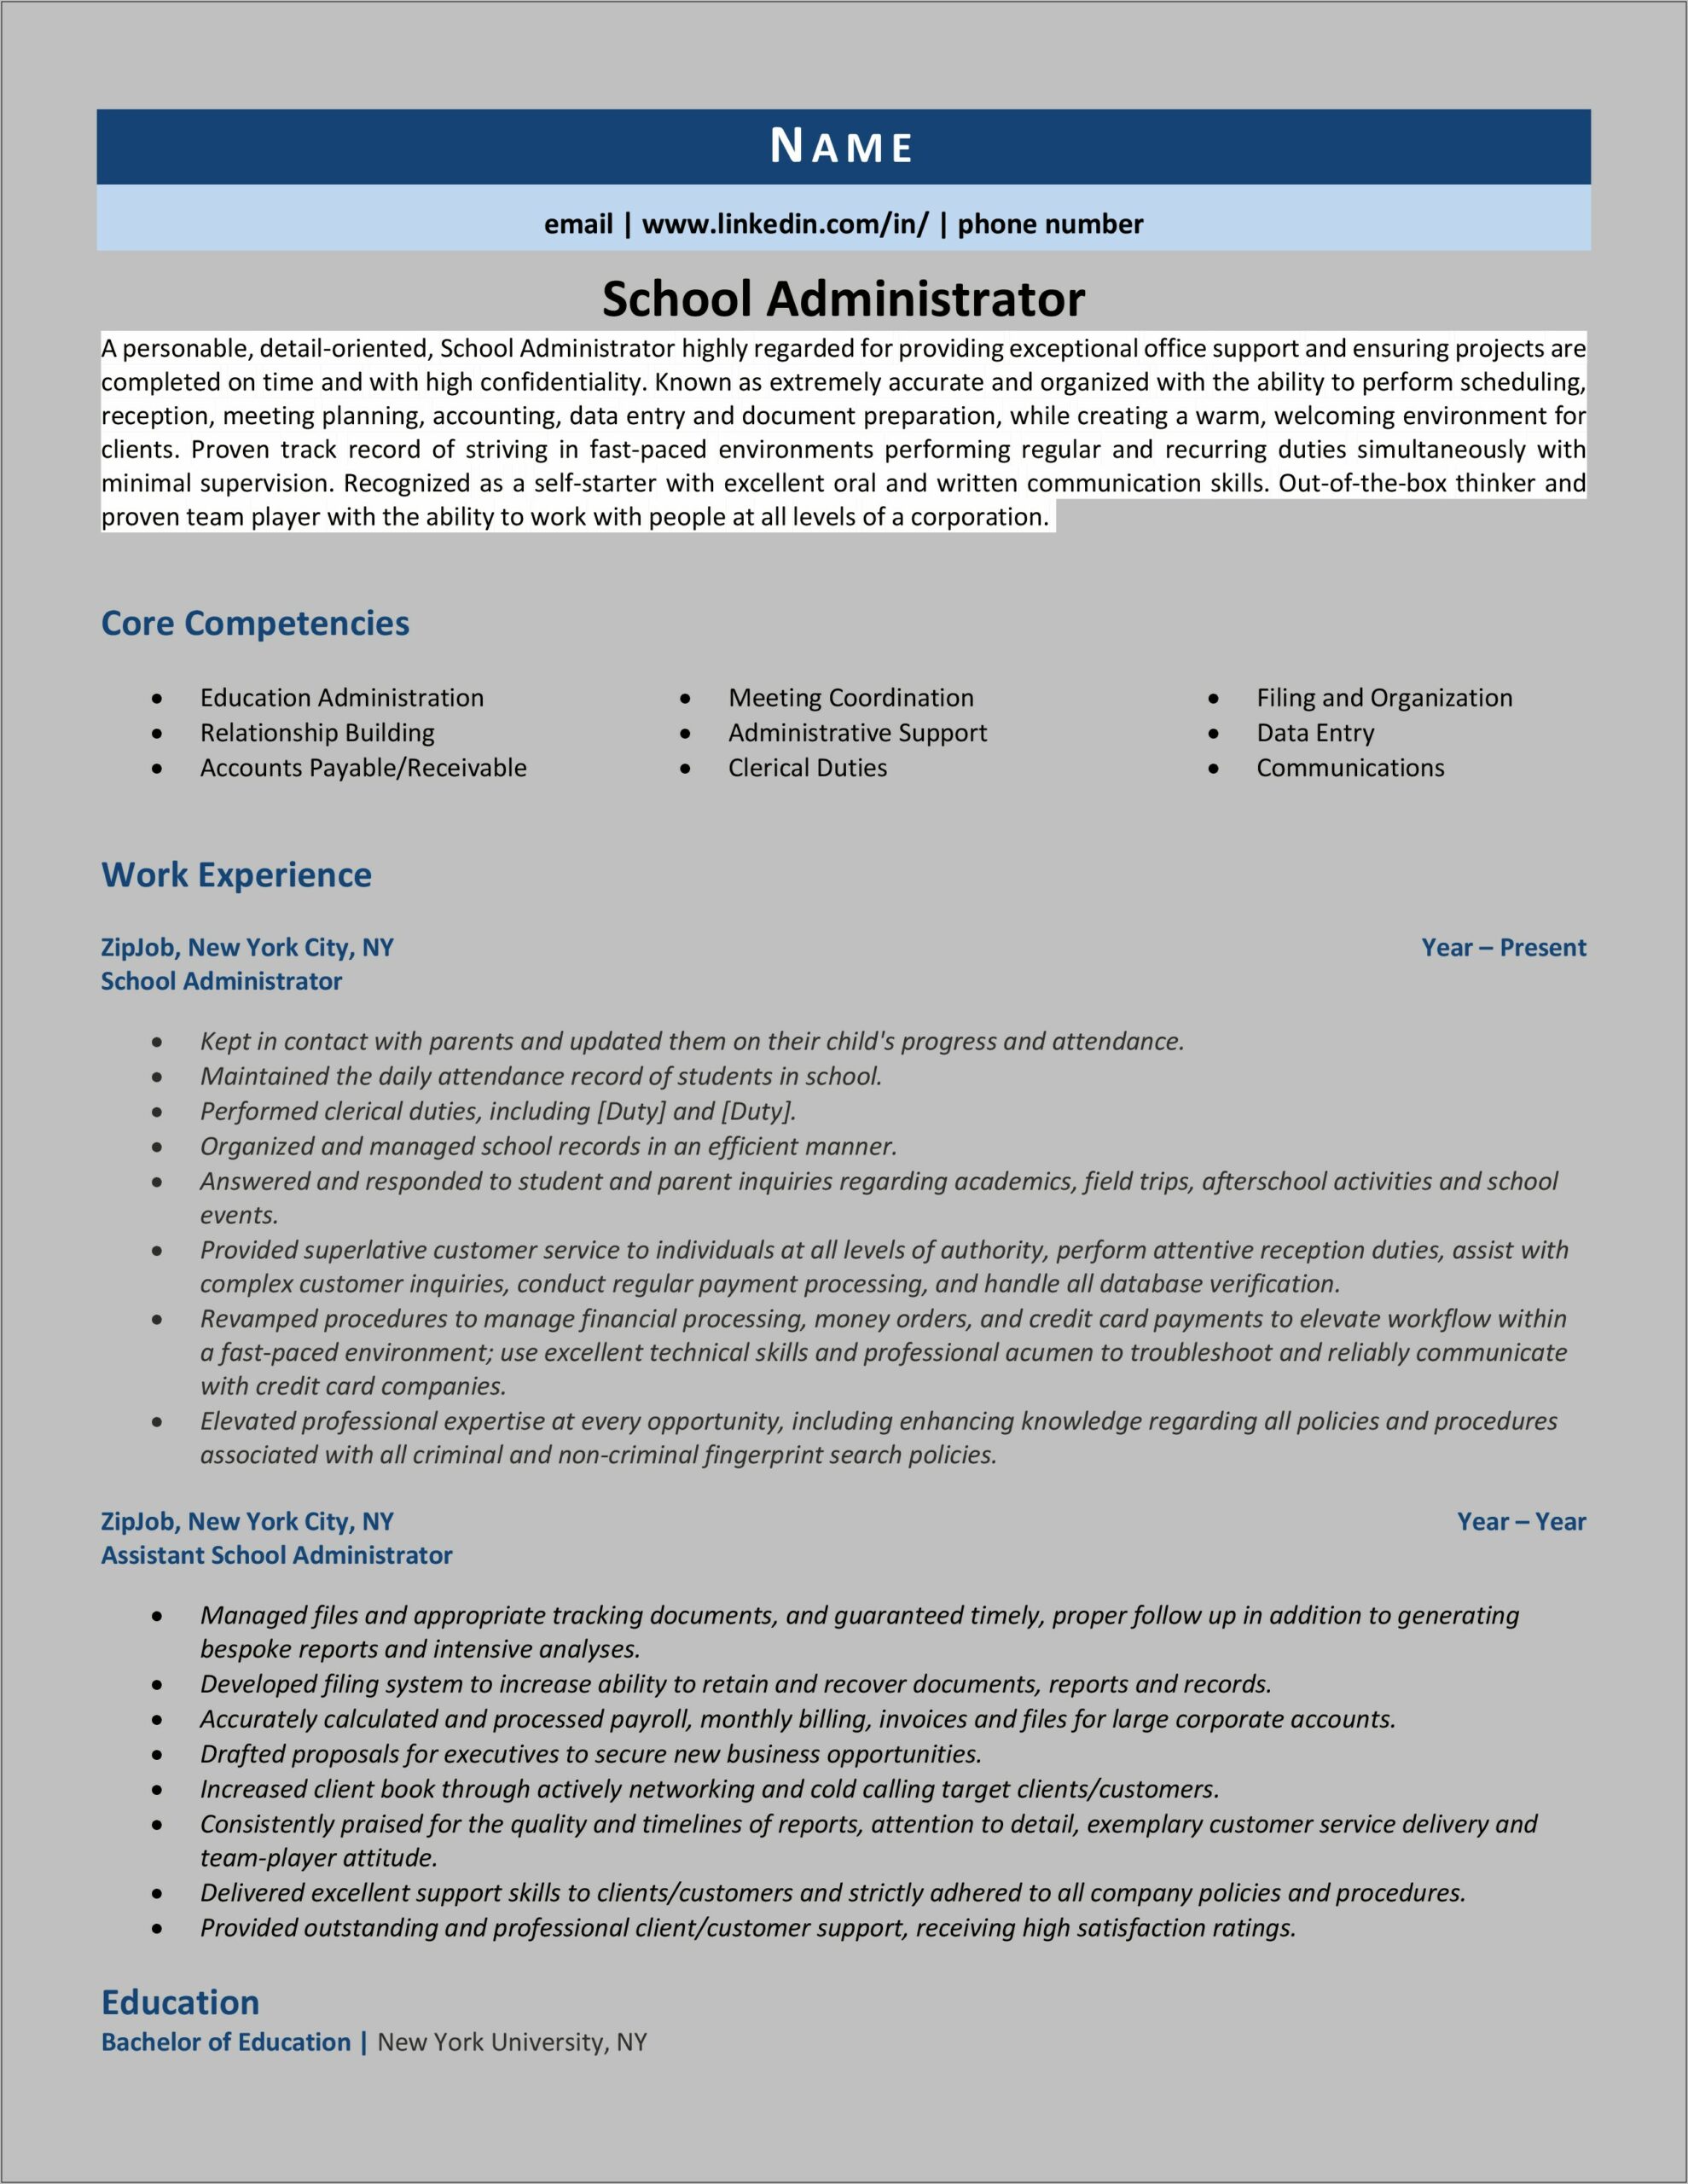 School Administrator Job Description Resume